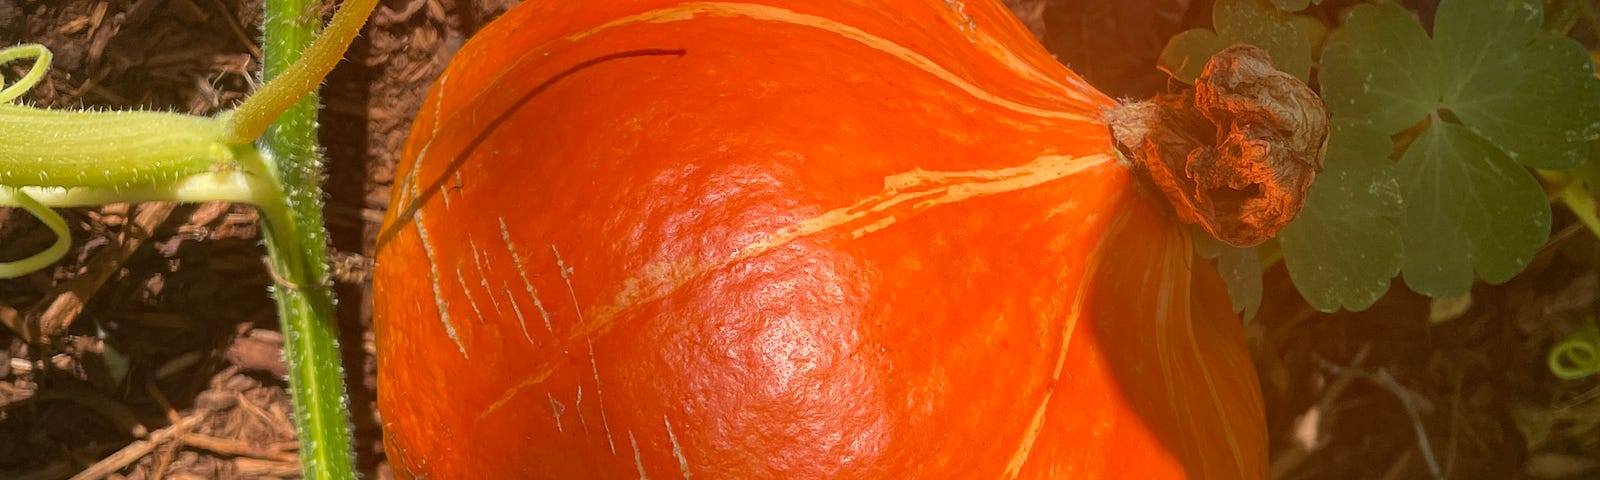 Author’s photo of her orange winter squash